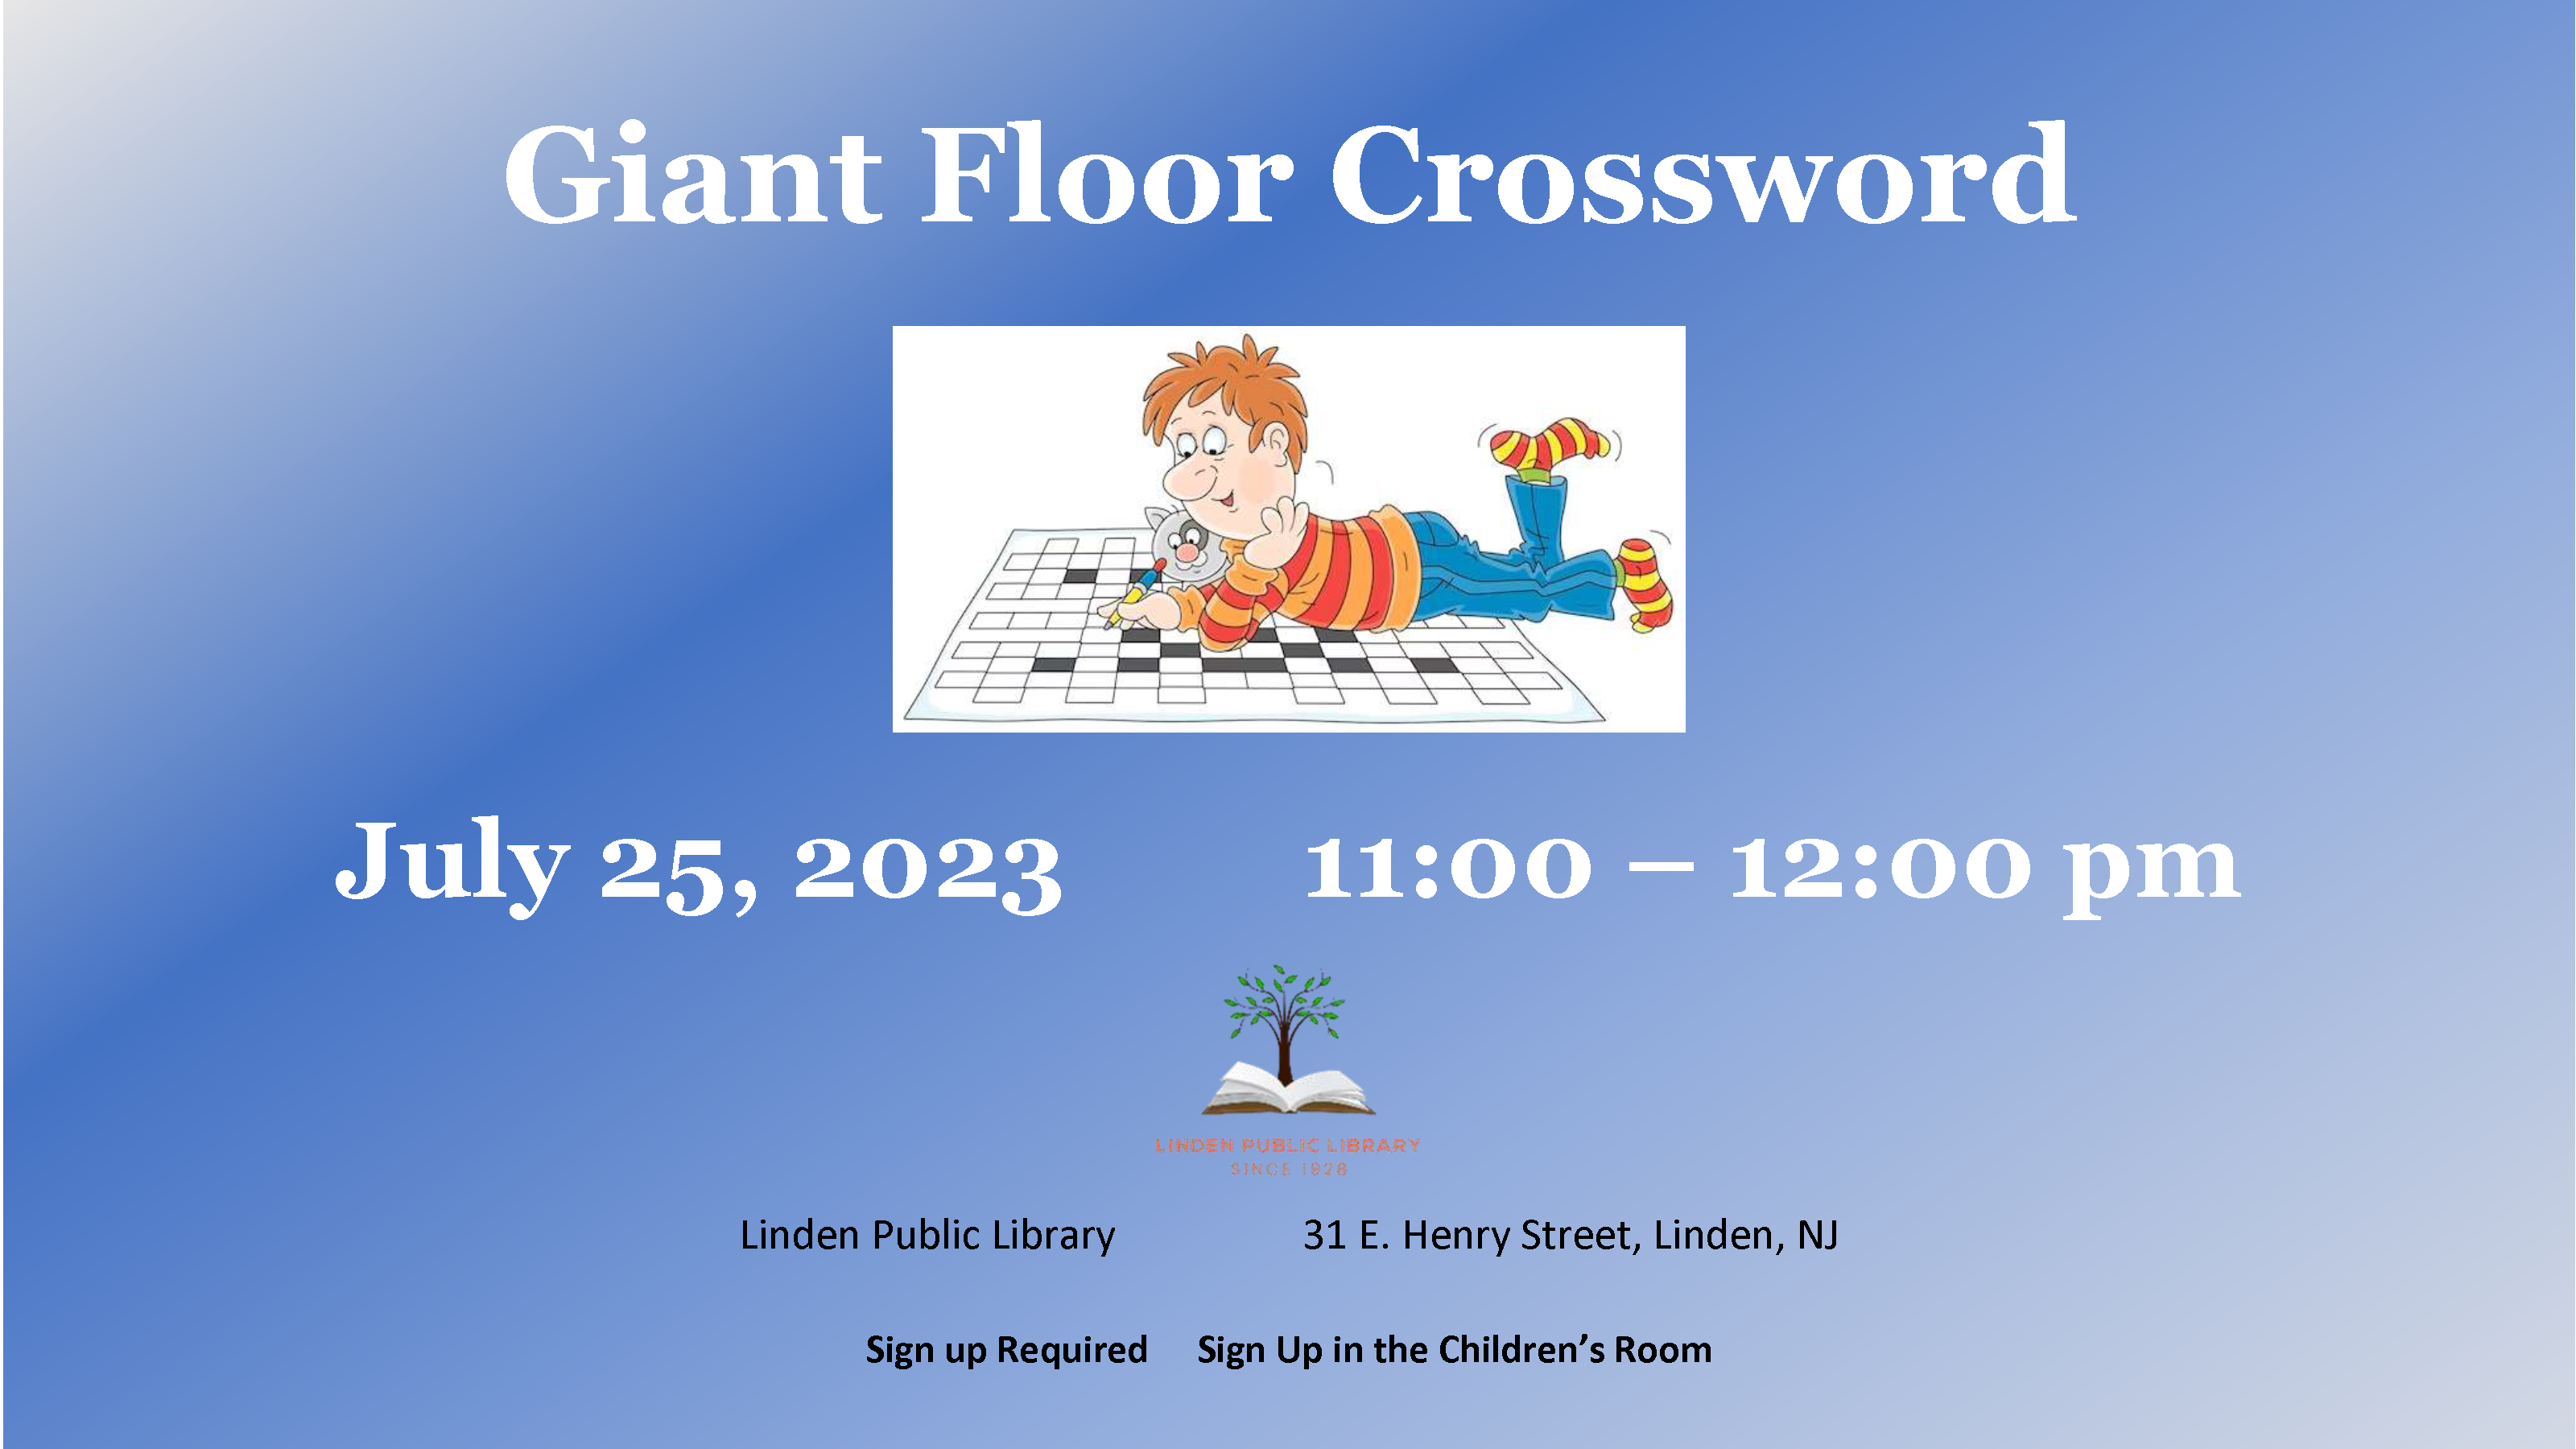 Giant Floor Crosswood Linden Free Public Library